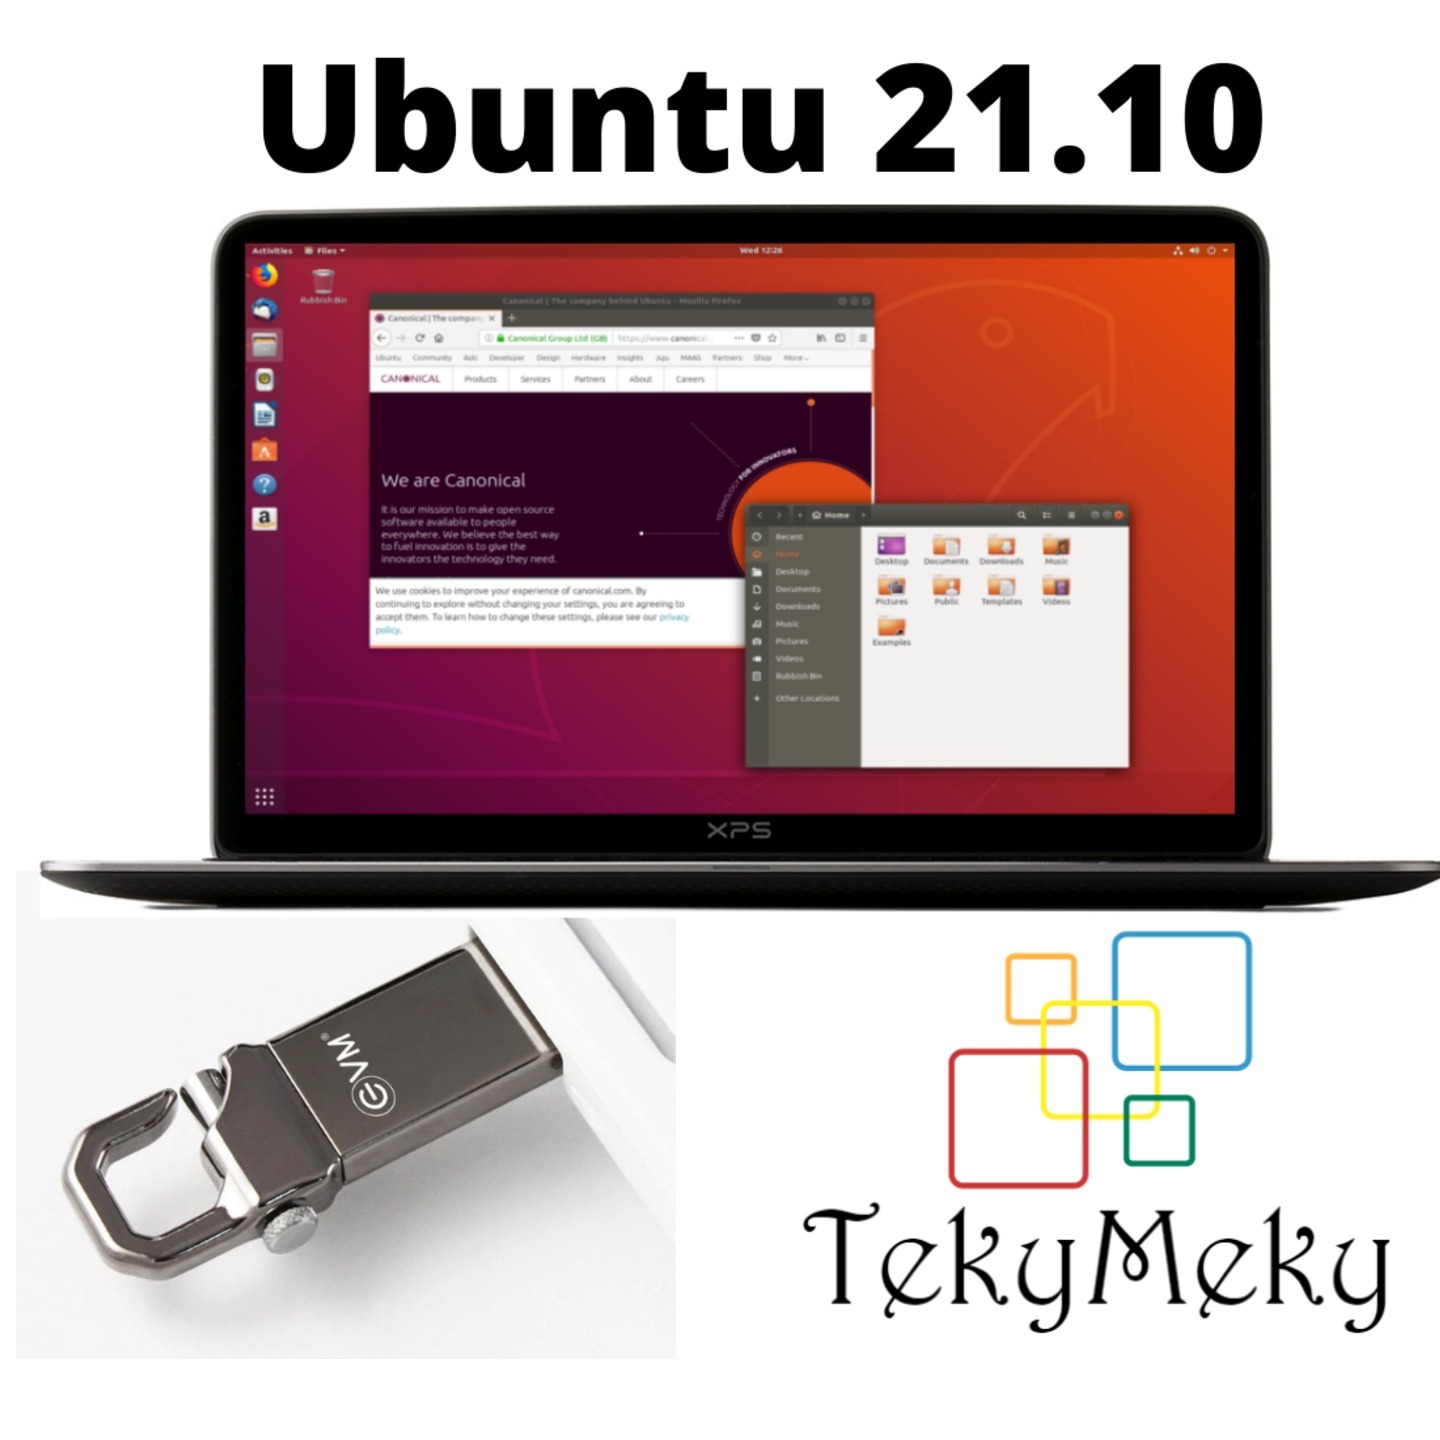 Ubuntu Linux Ver 21.10 Live + Installer 64 Bit Desktop Operating System with 16Gb Metal USB